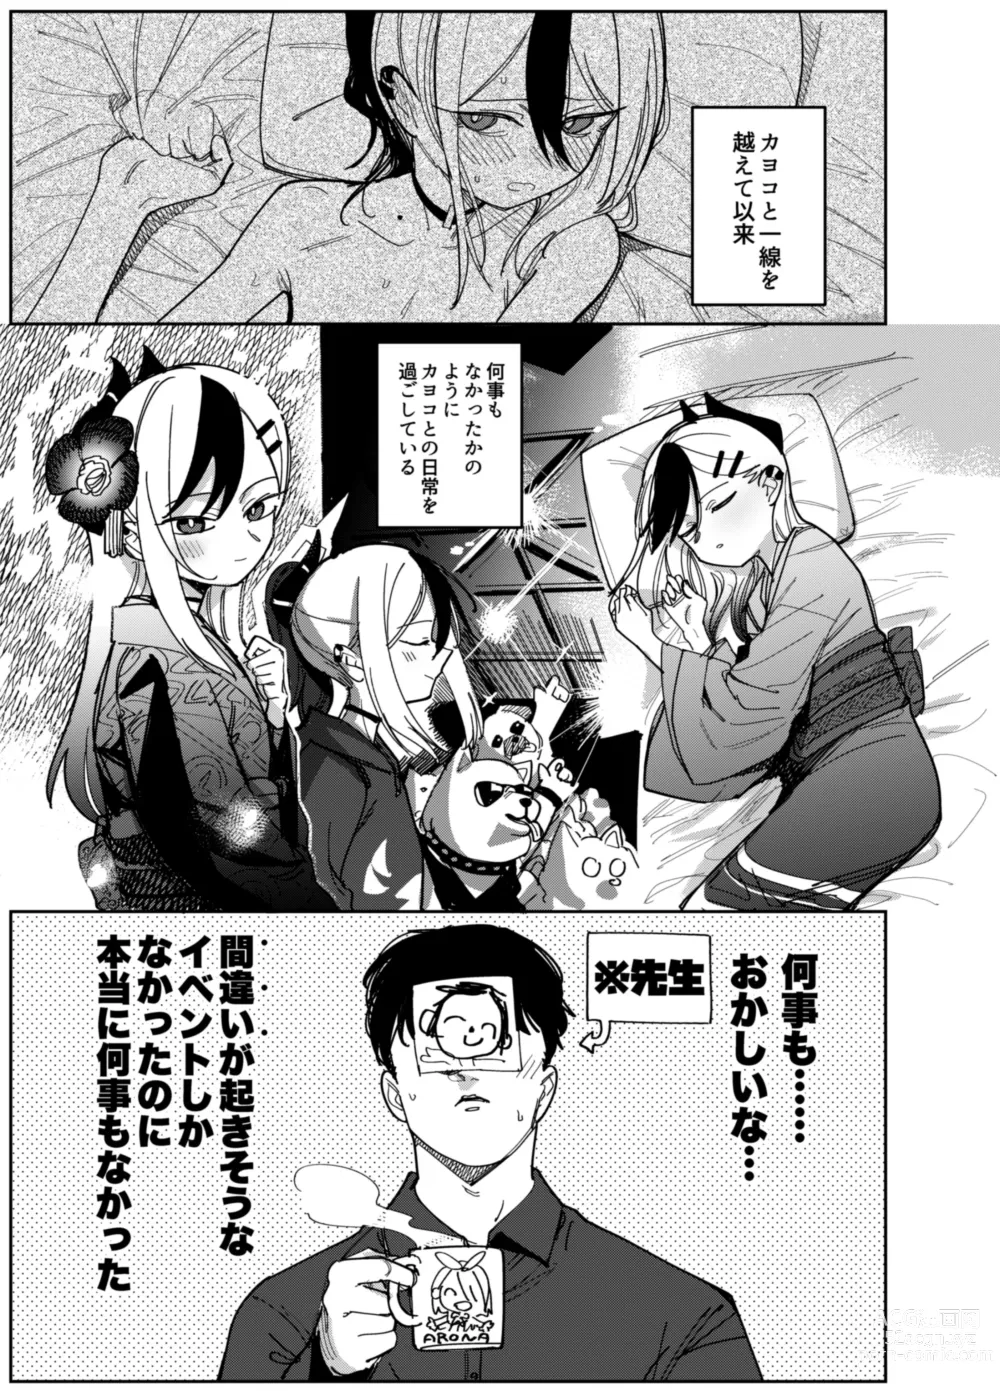 Page 3 of doujinshi Onikata Kayoko wa Konna Koto Shinai. Part. 2 - Onikata Kayoko wont do this type of stuff.